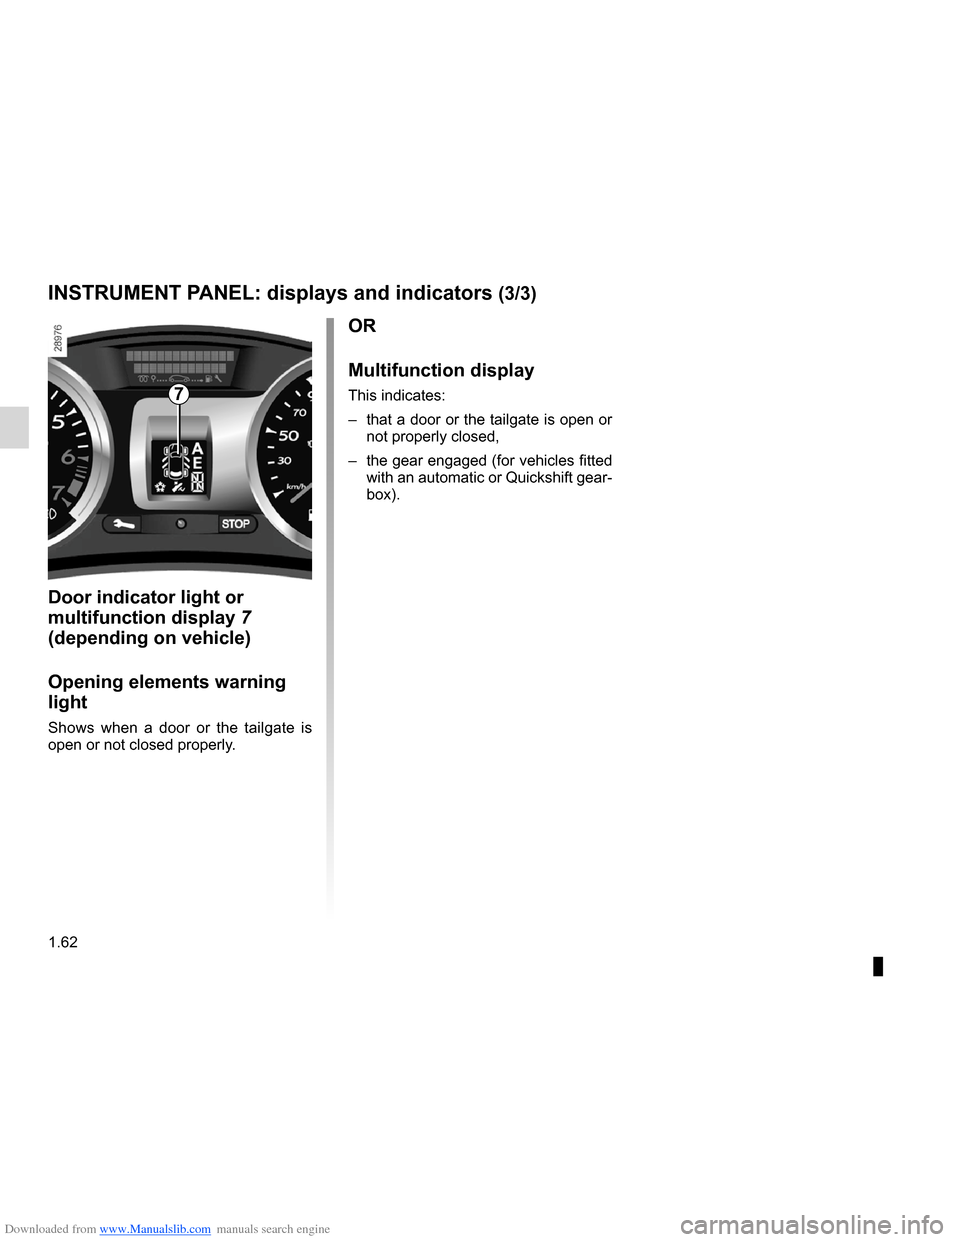 RENAULT CLIO 2012 X85 / 3.G User Guide Downloaded from www.Manualslib.com manuals search engine 1.62
ENG_UD10345_1
Tableau de bord : afficheurs et indicateurs (X85 - B85 - C85 - S85 - K85 - Renault)
ENG_NU_853-7_BCSK85_Renault_1
INSTRUMENT